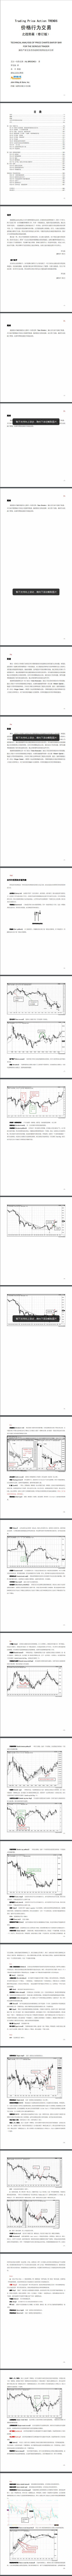 Al Brooks ：《价格行为交易之趋势篇》中文版图片连载（一）